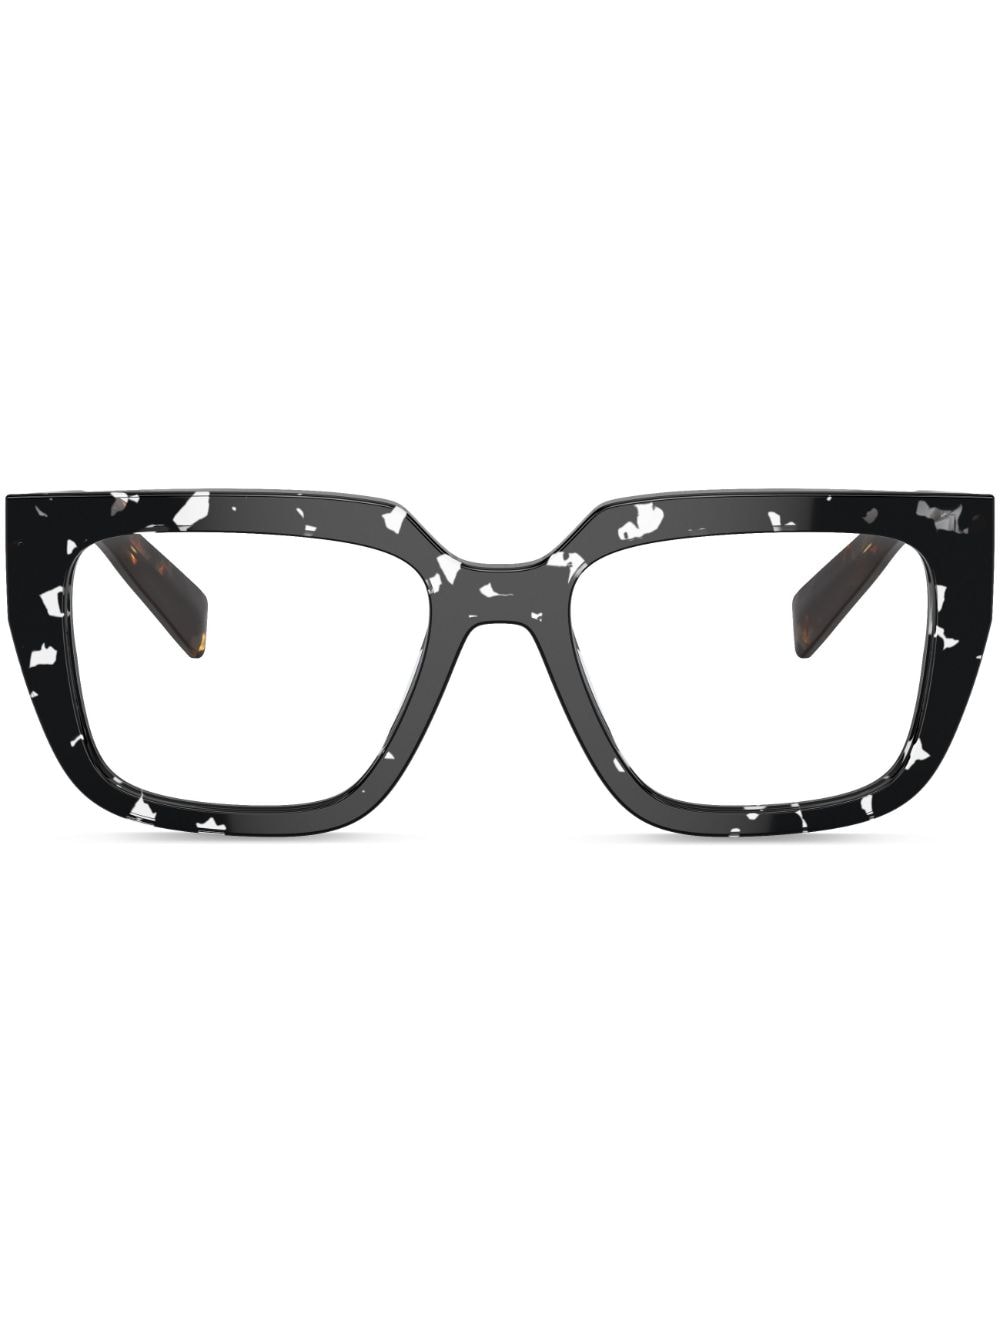 Prada Cat-eye-brille In Schildpattoptik In Black